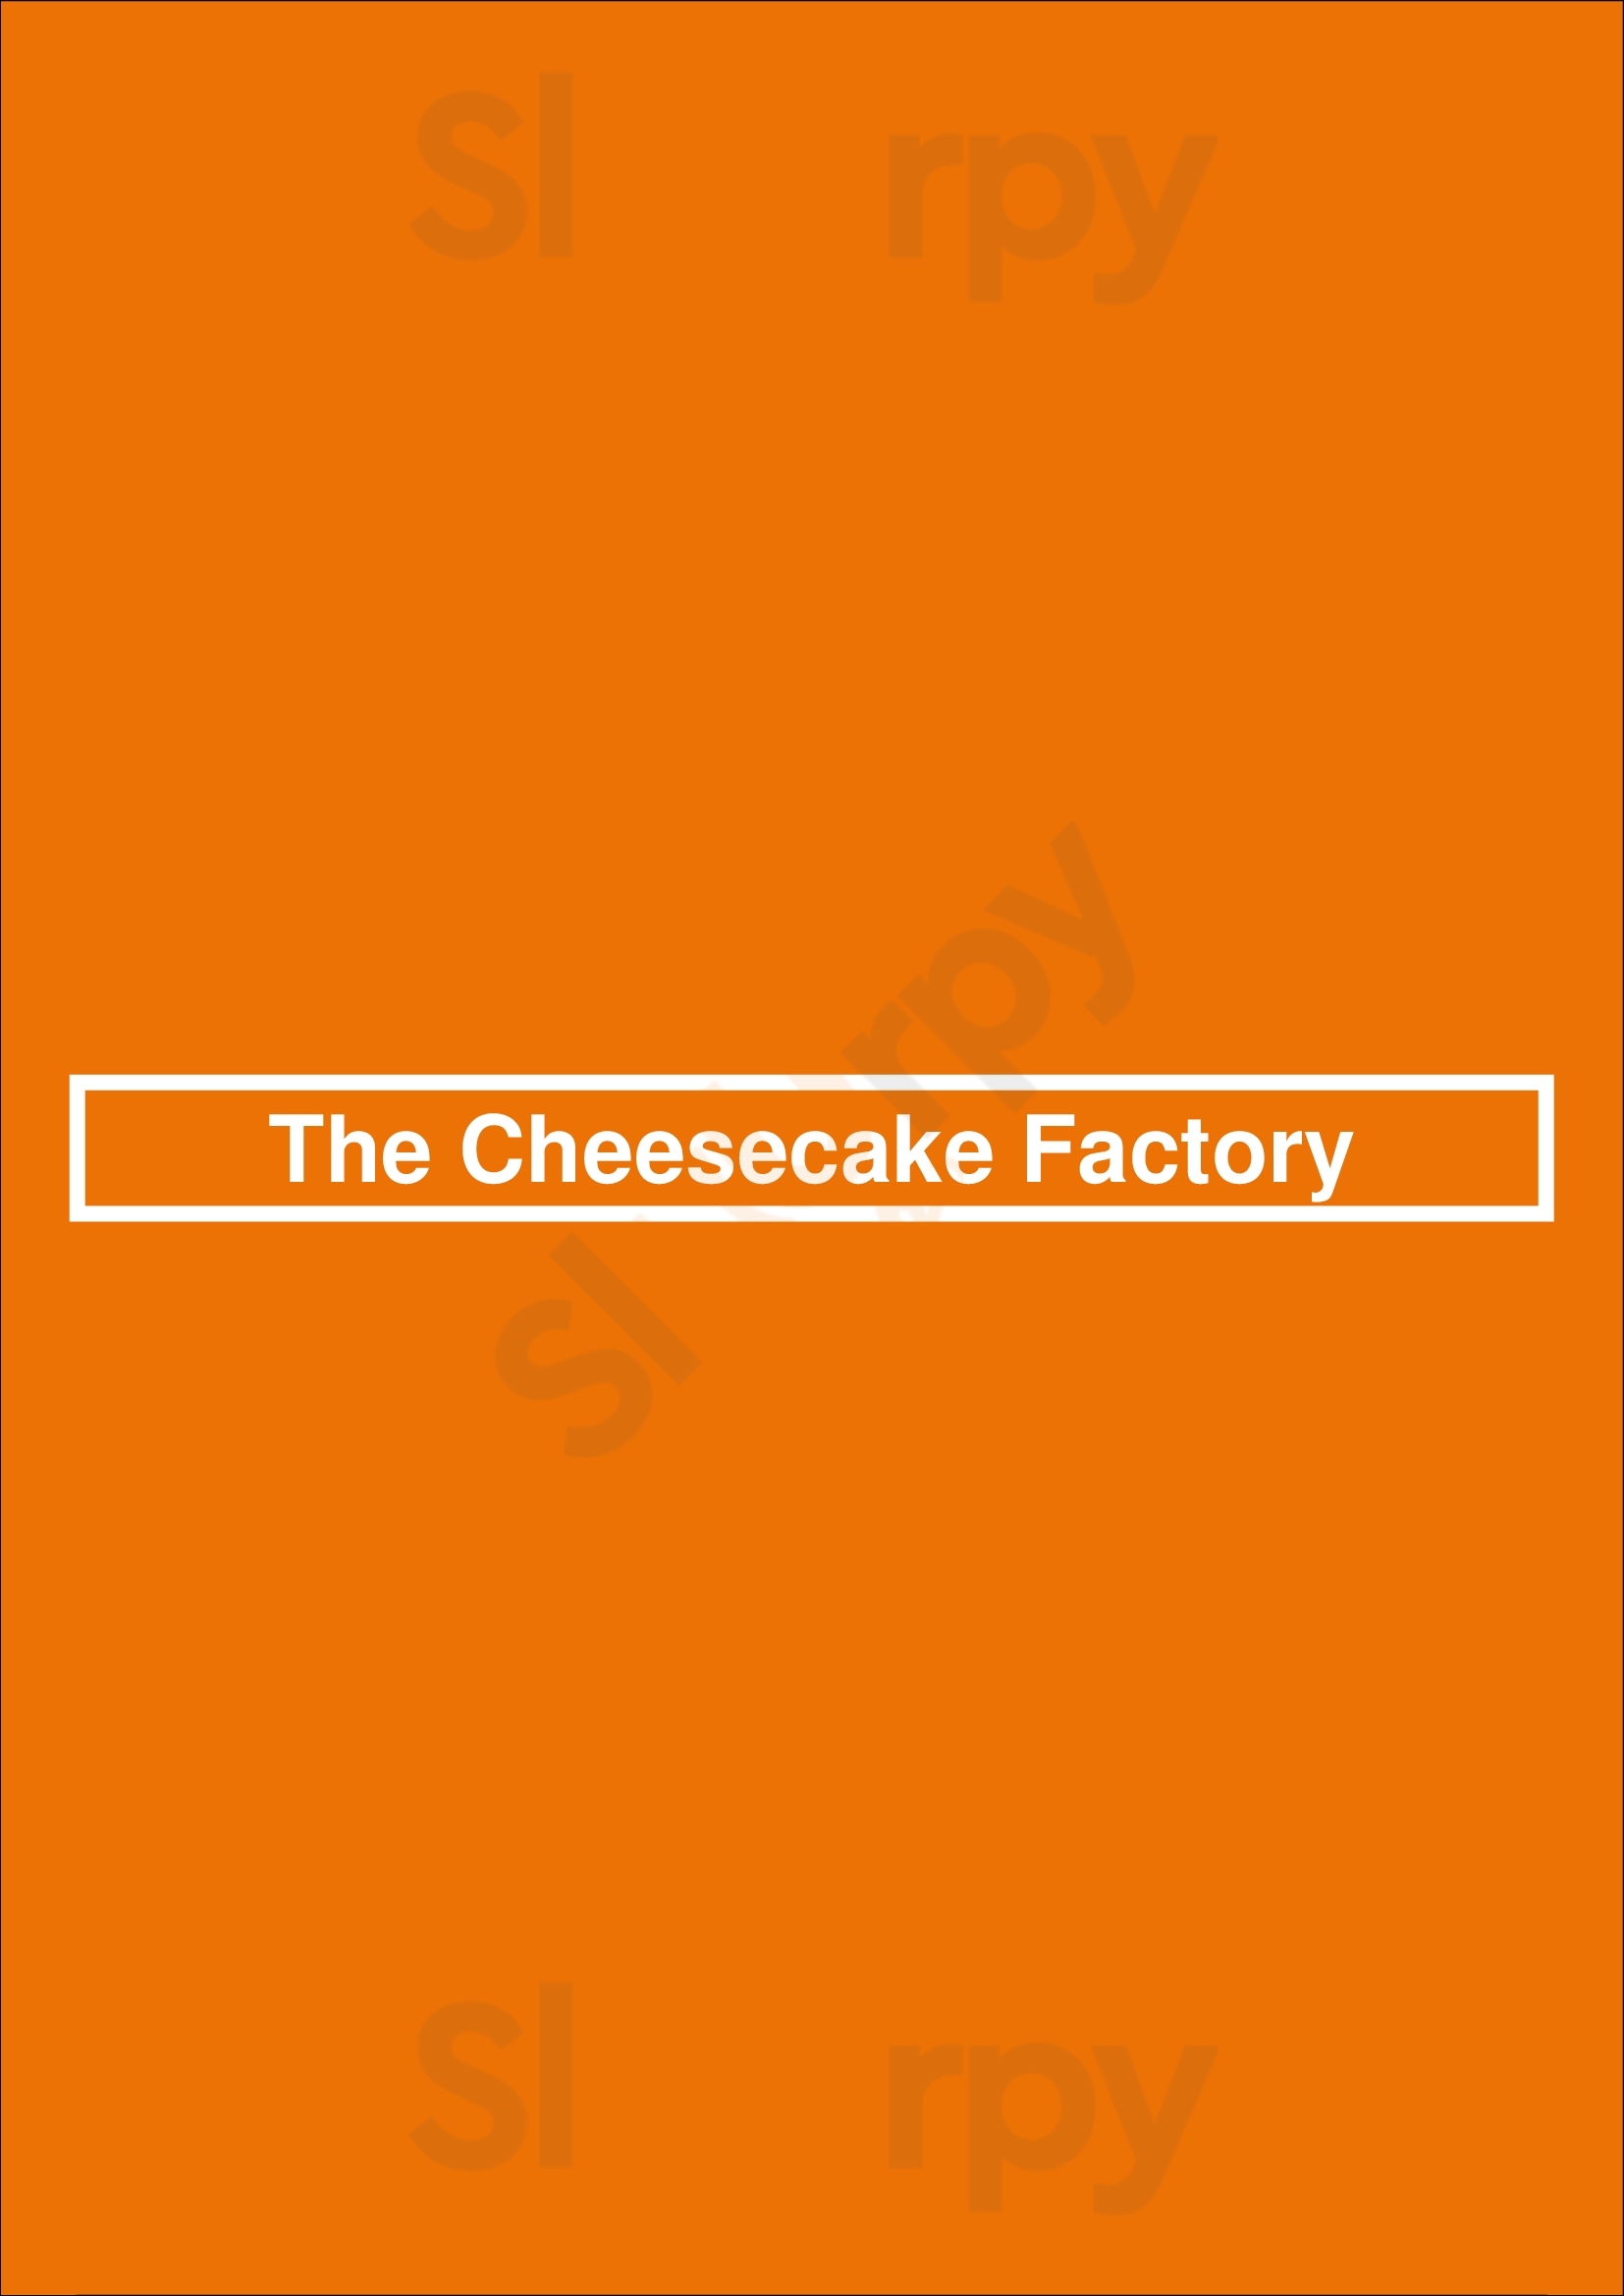 The Cheesecake Factory Boca Raton Menu - 1